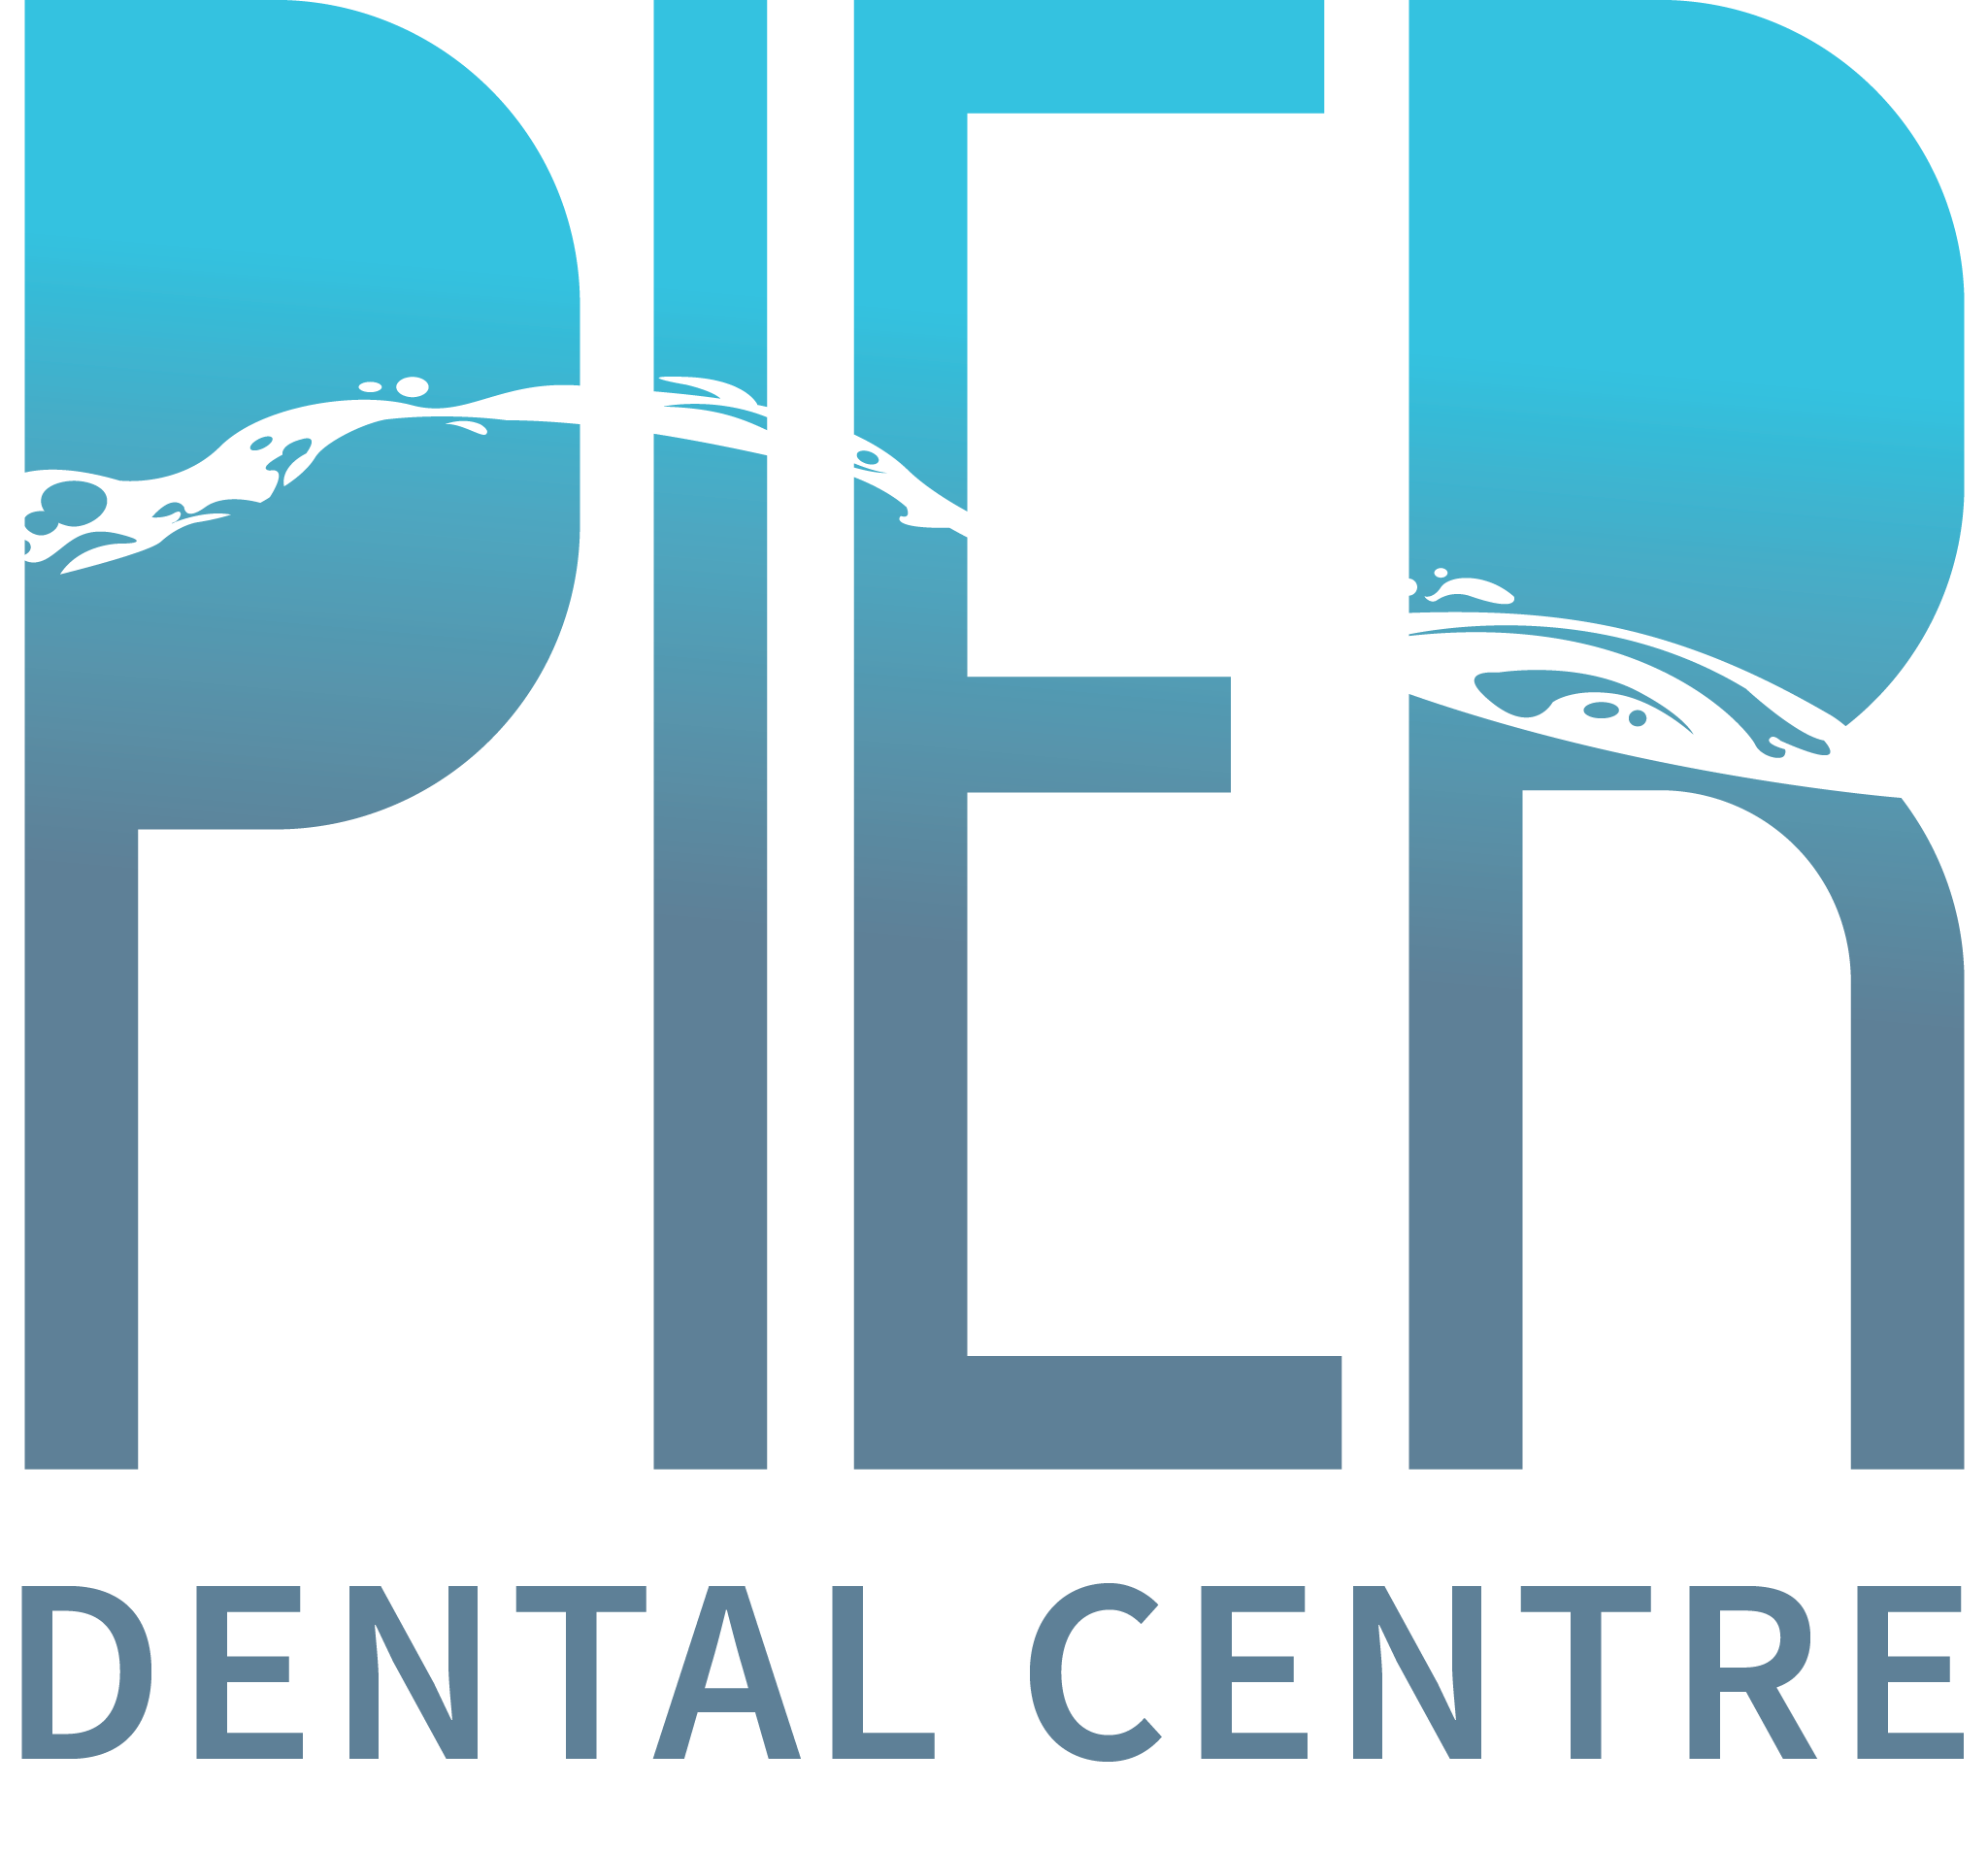 Pier Dental Centre